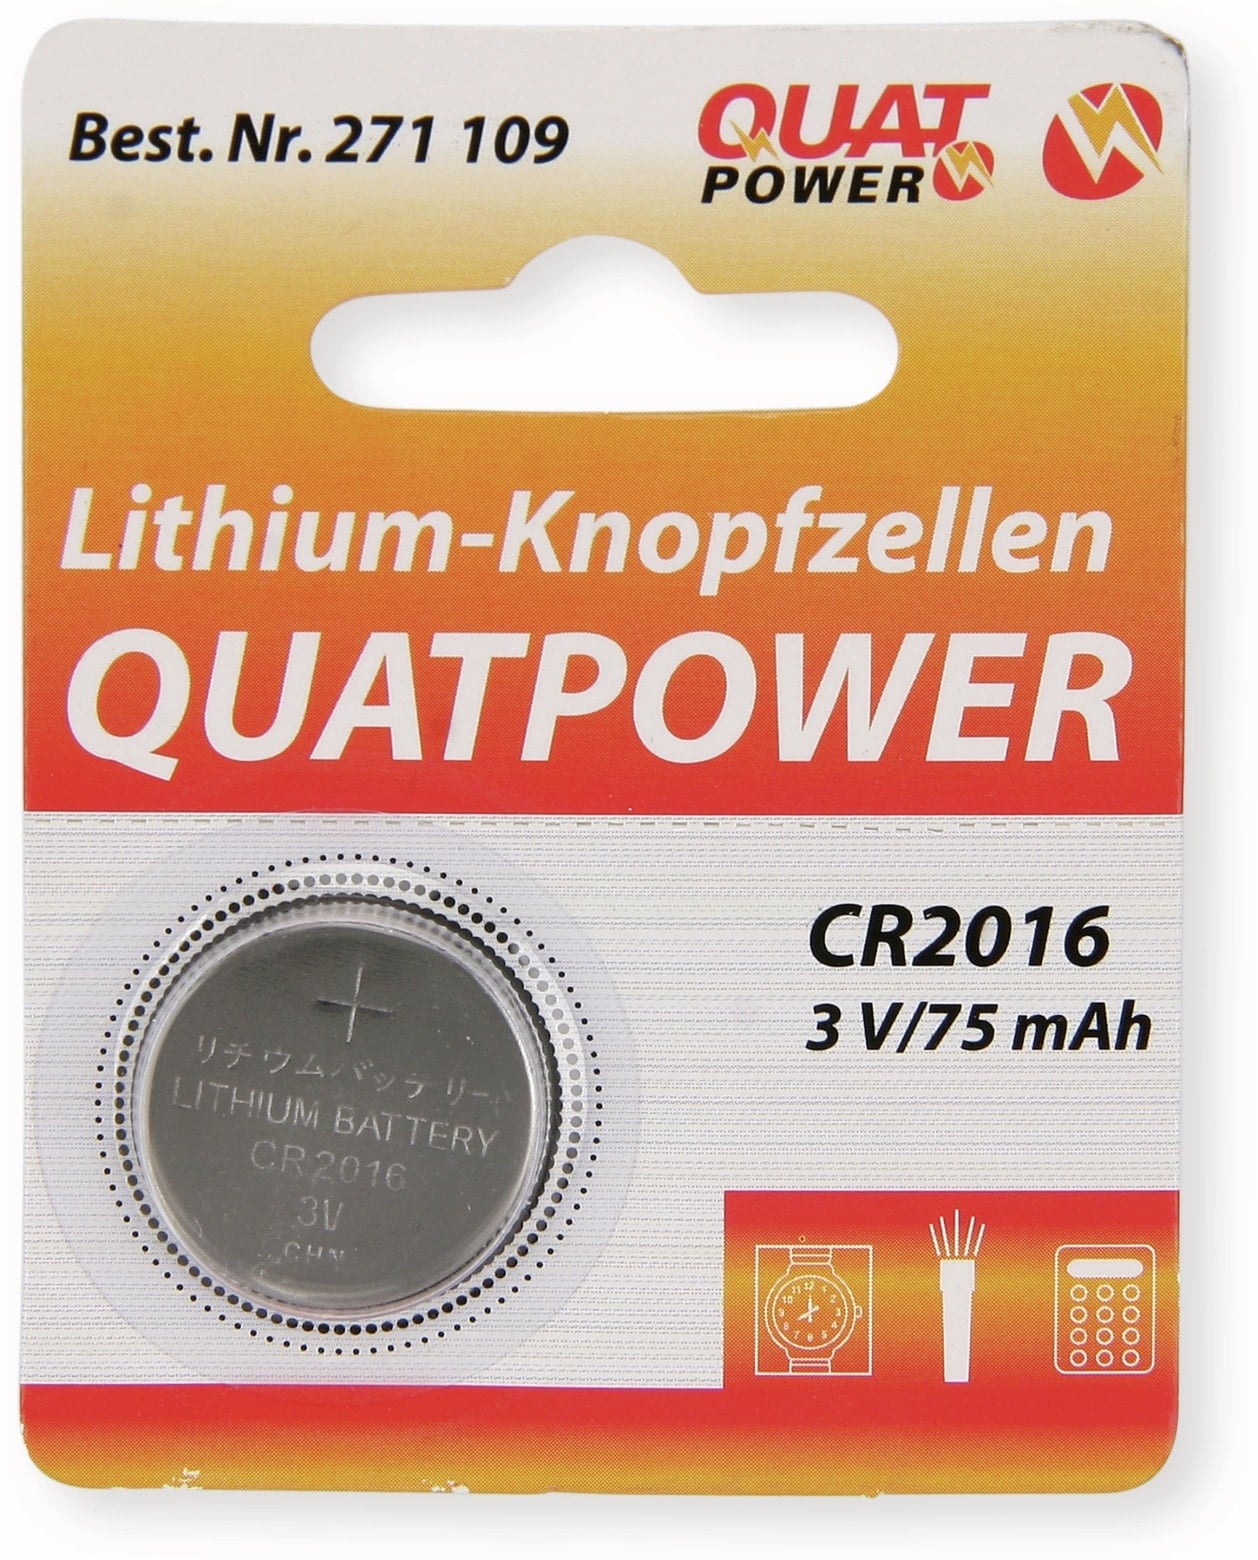 QUATPOWER Lithium-Knopfzellen CR2016